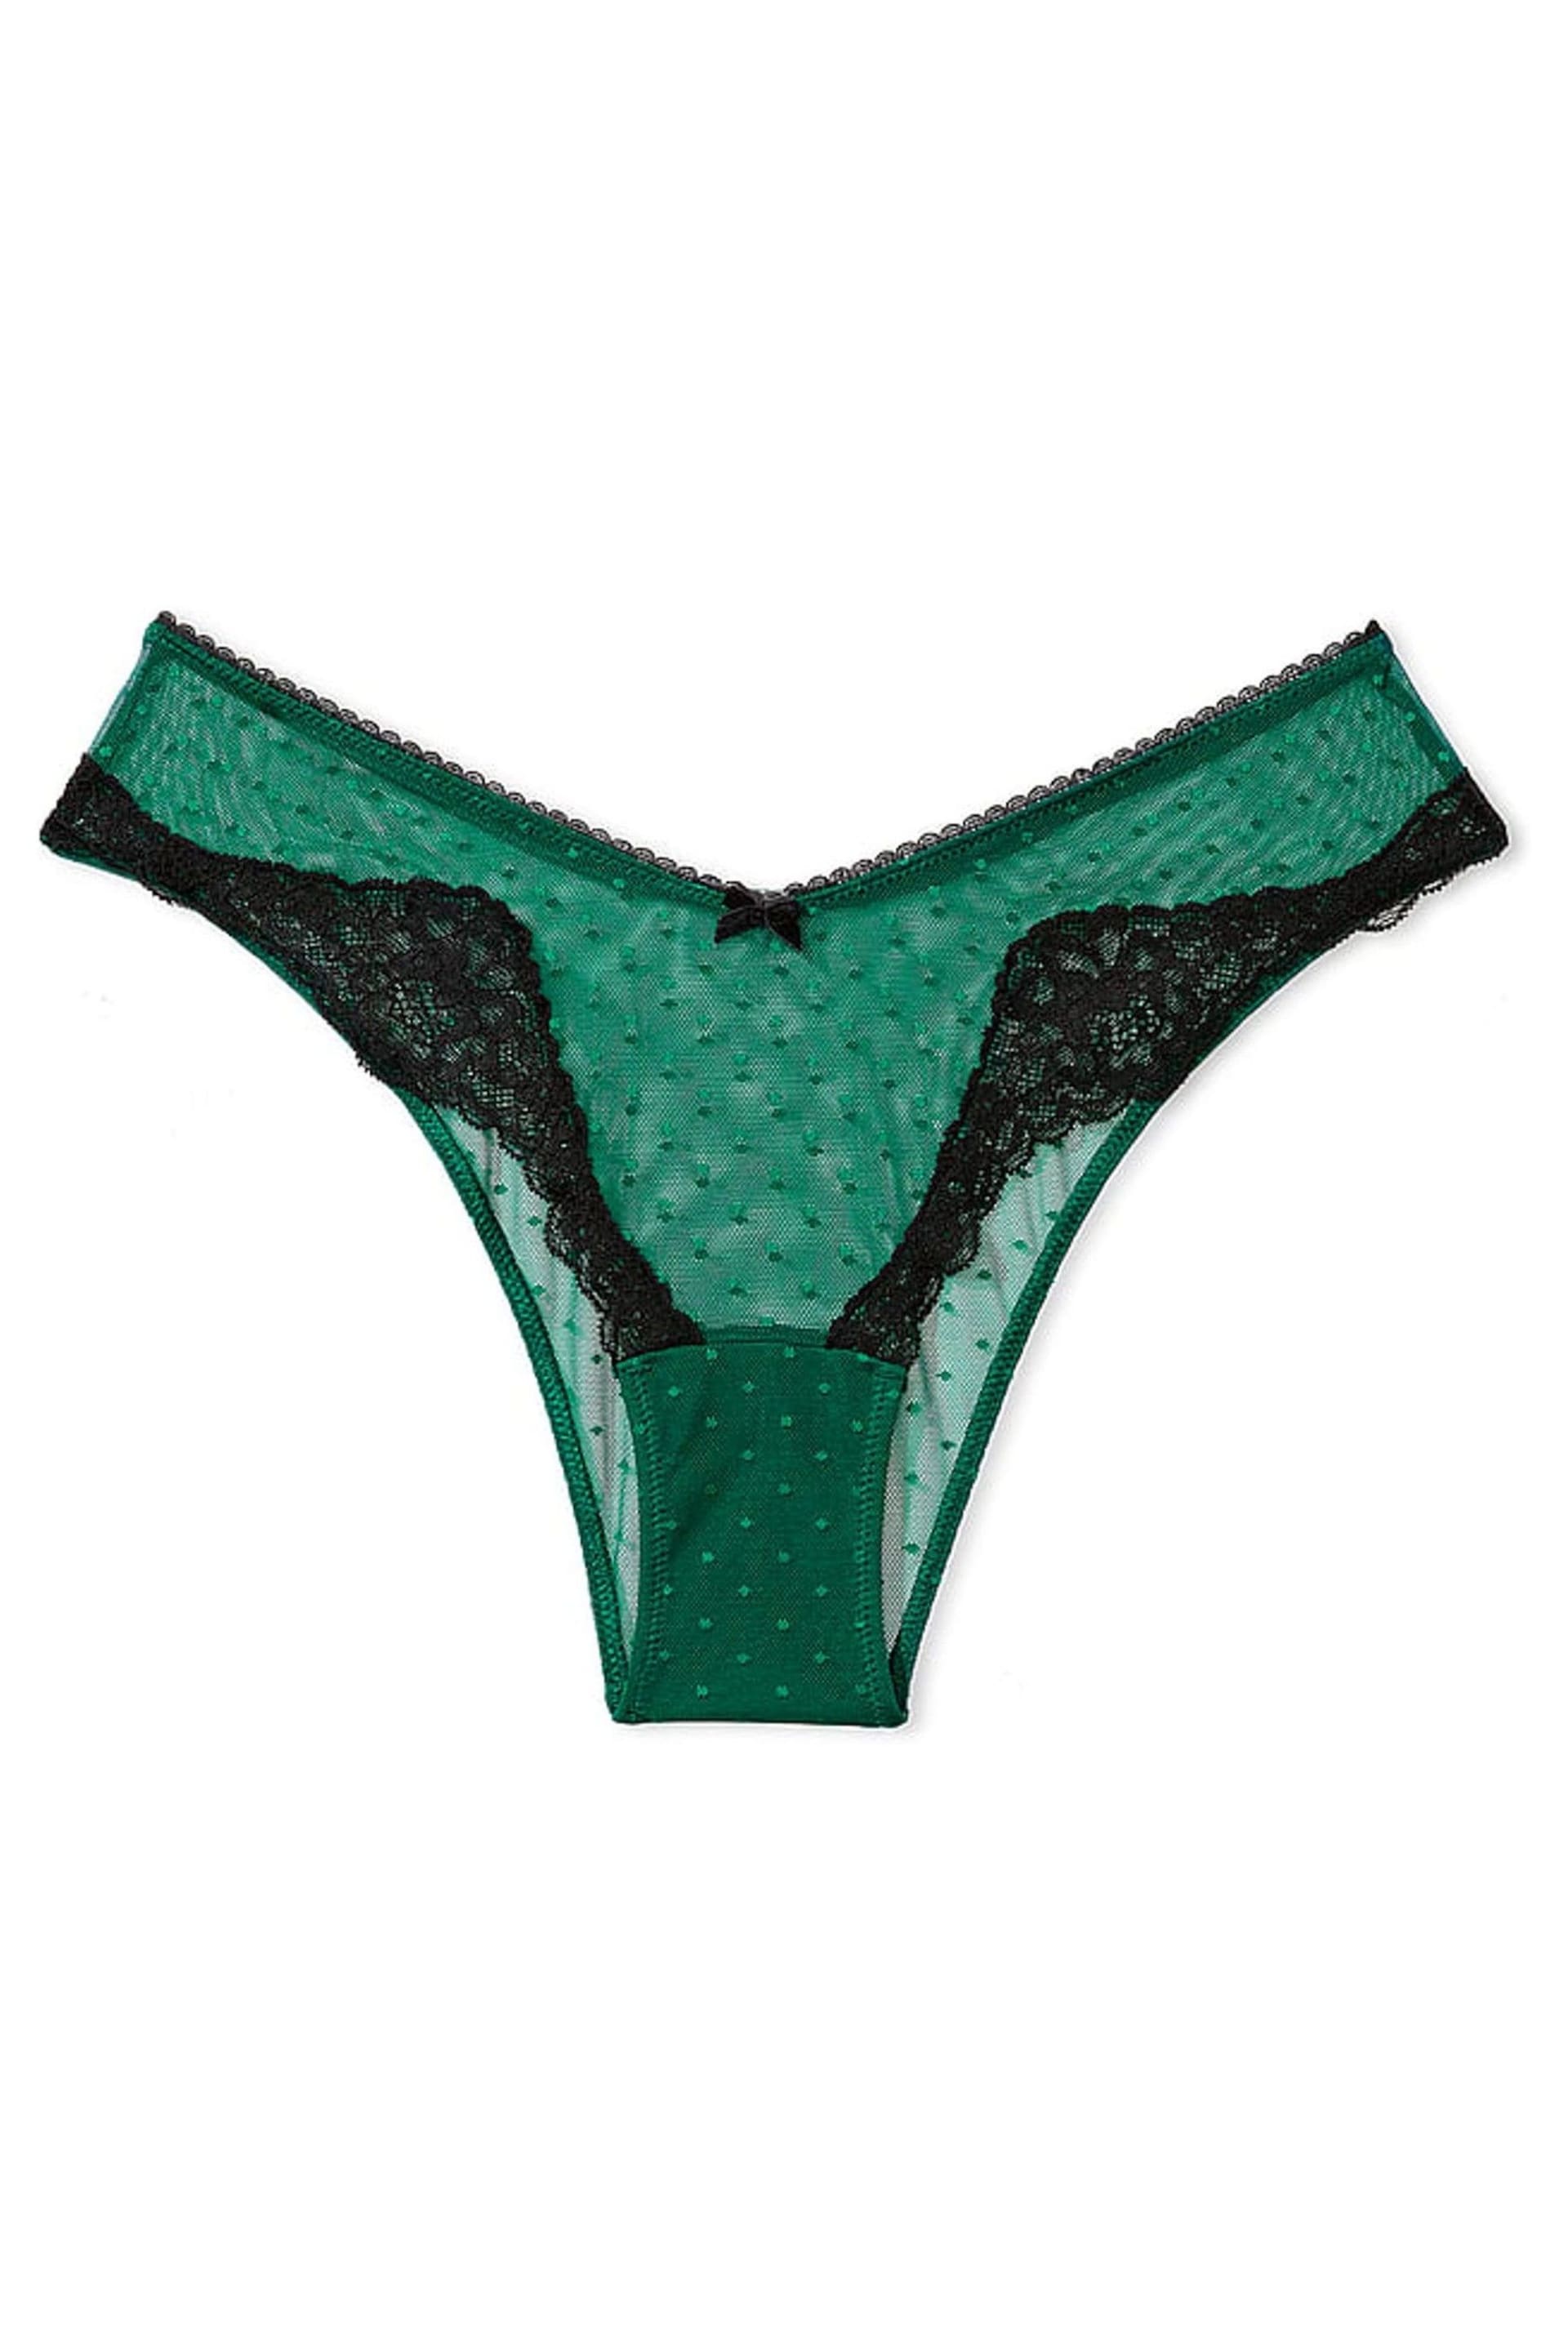 Victoria's Secret Black Ivy Green Black Lace Brazilian Knickers - Image 3 of 3